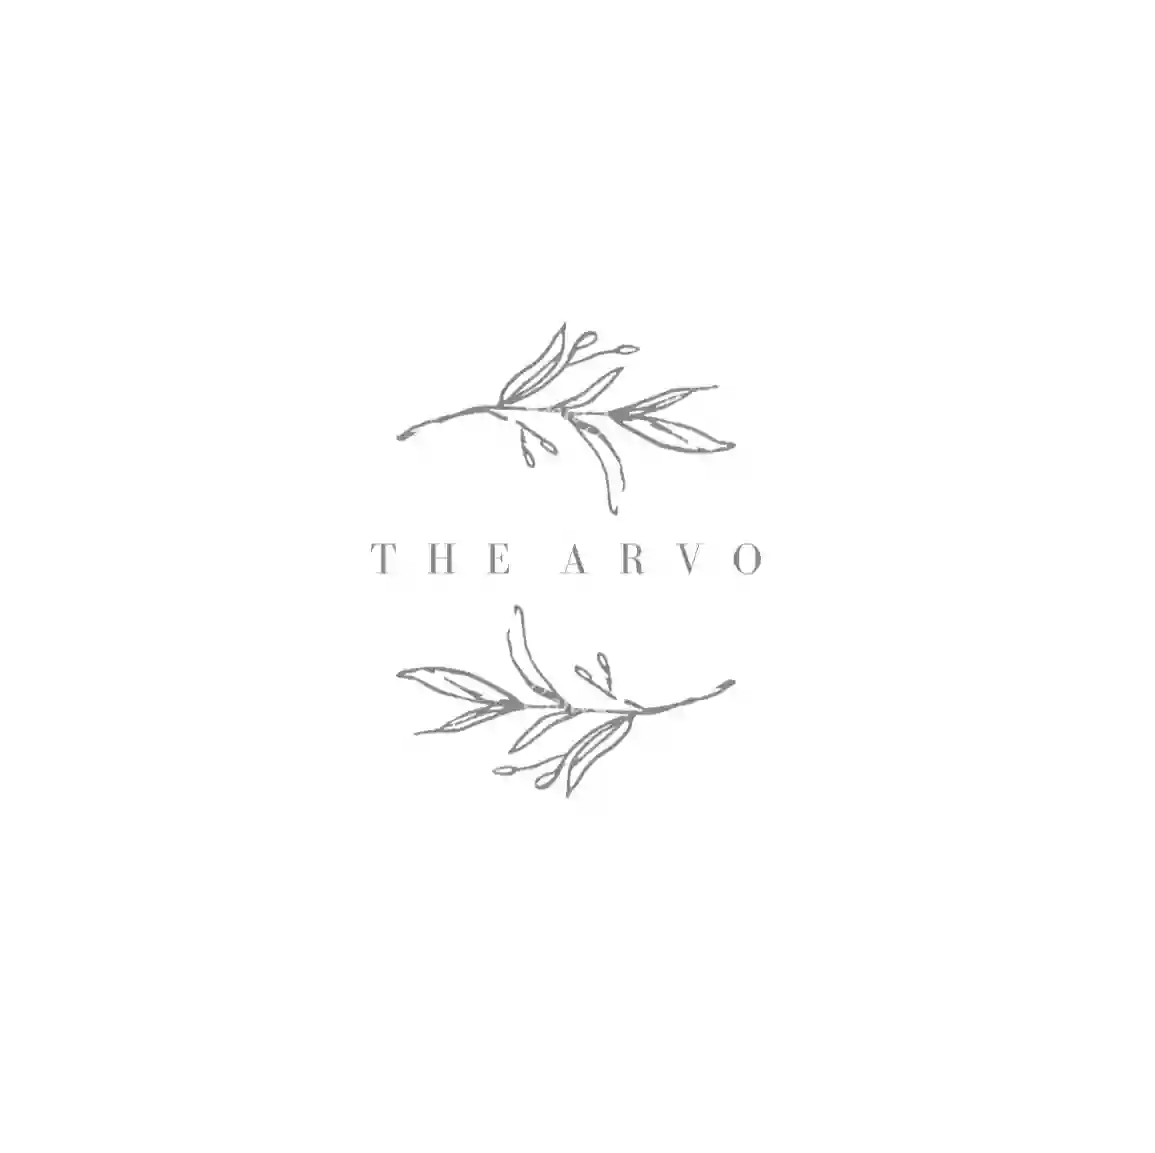 The Arvo